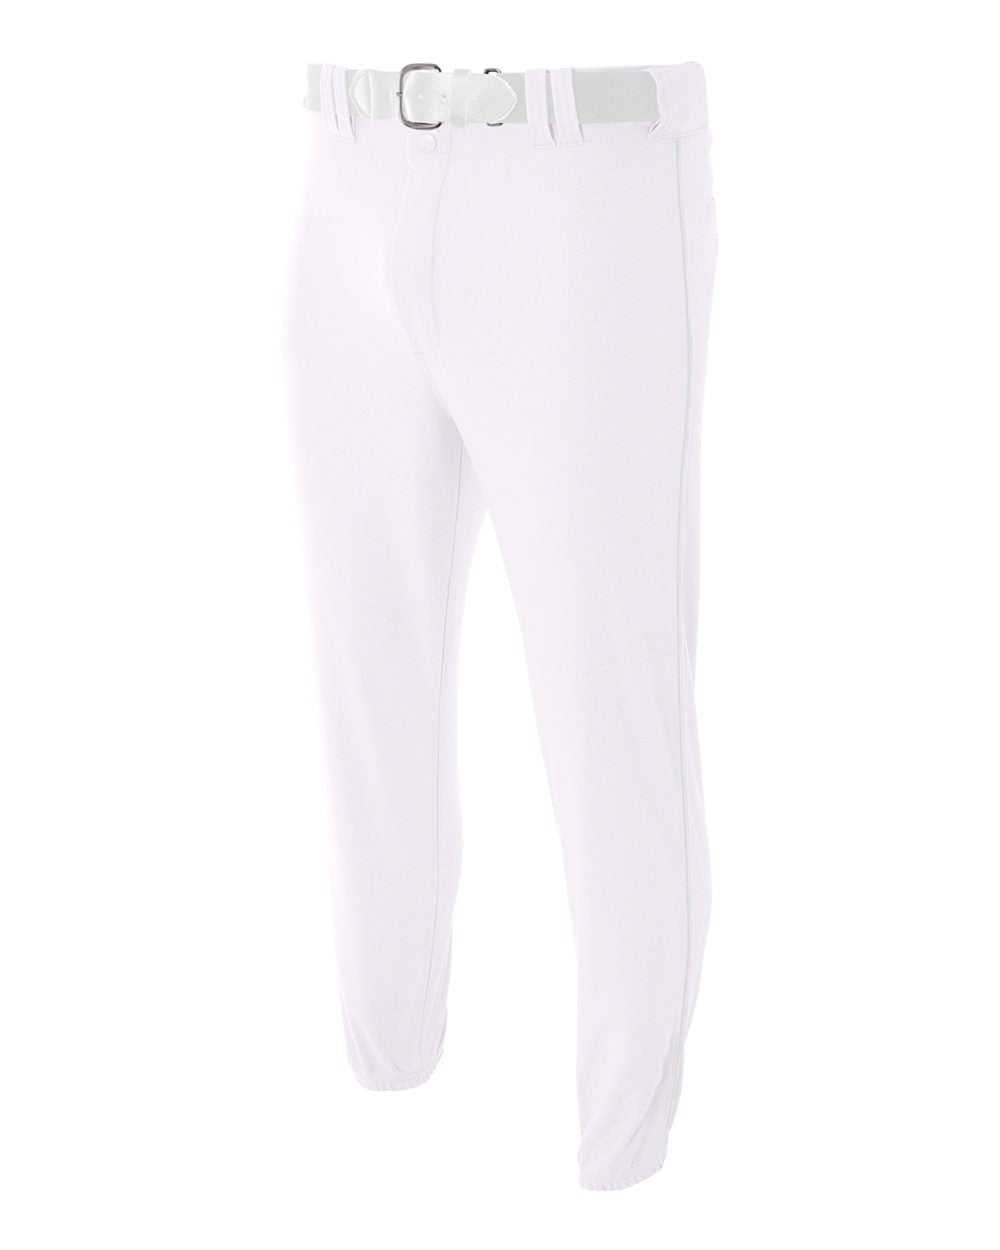 A4 NB6178 Youth Pro Style Elastic Bottom Baseball Pant - White - HIT a Double